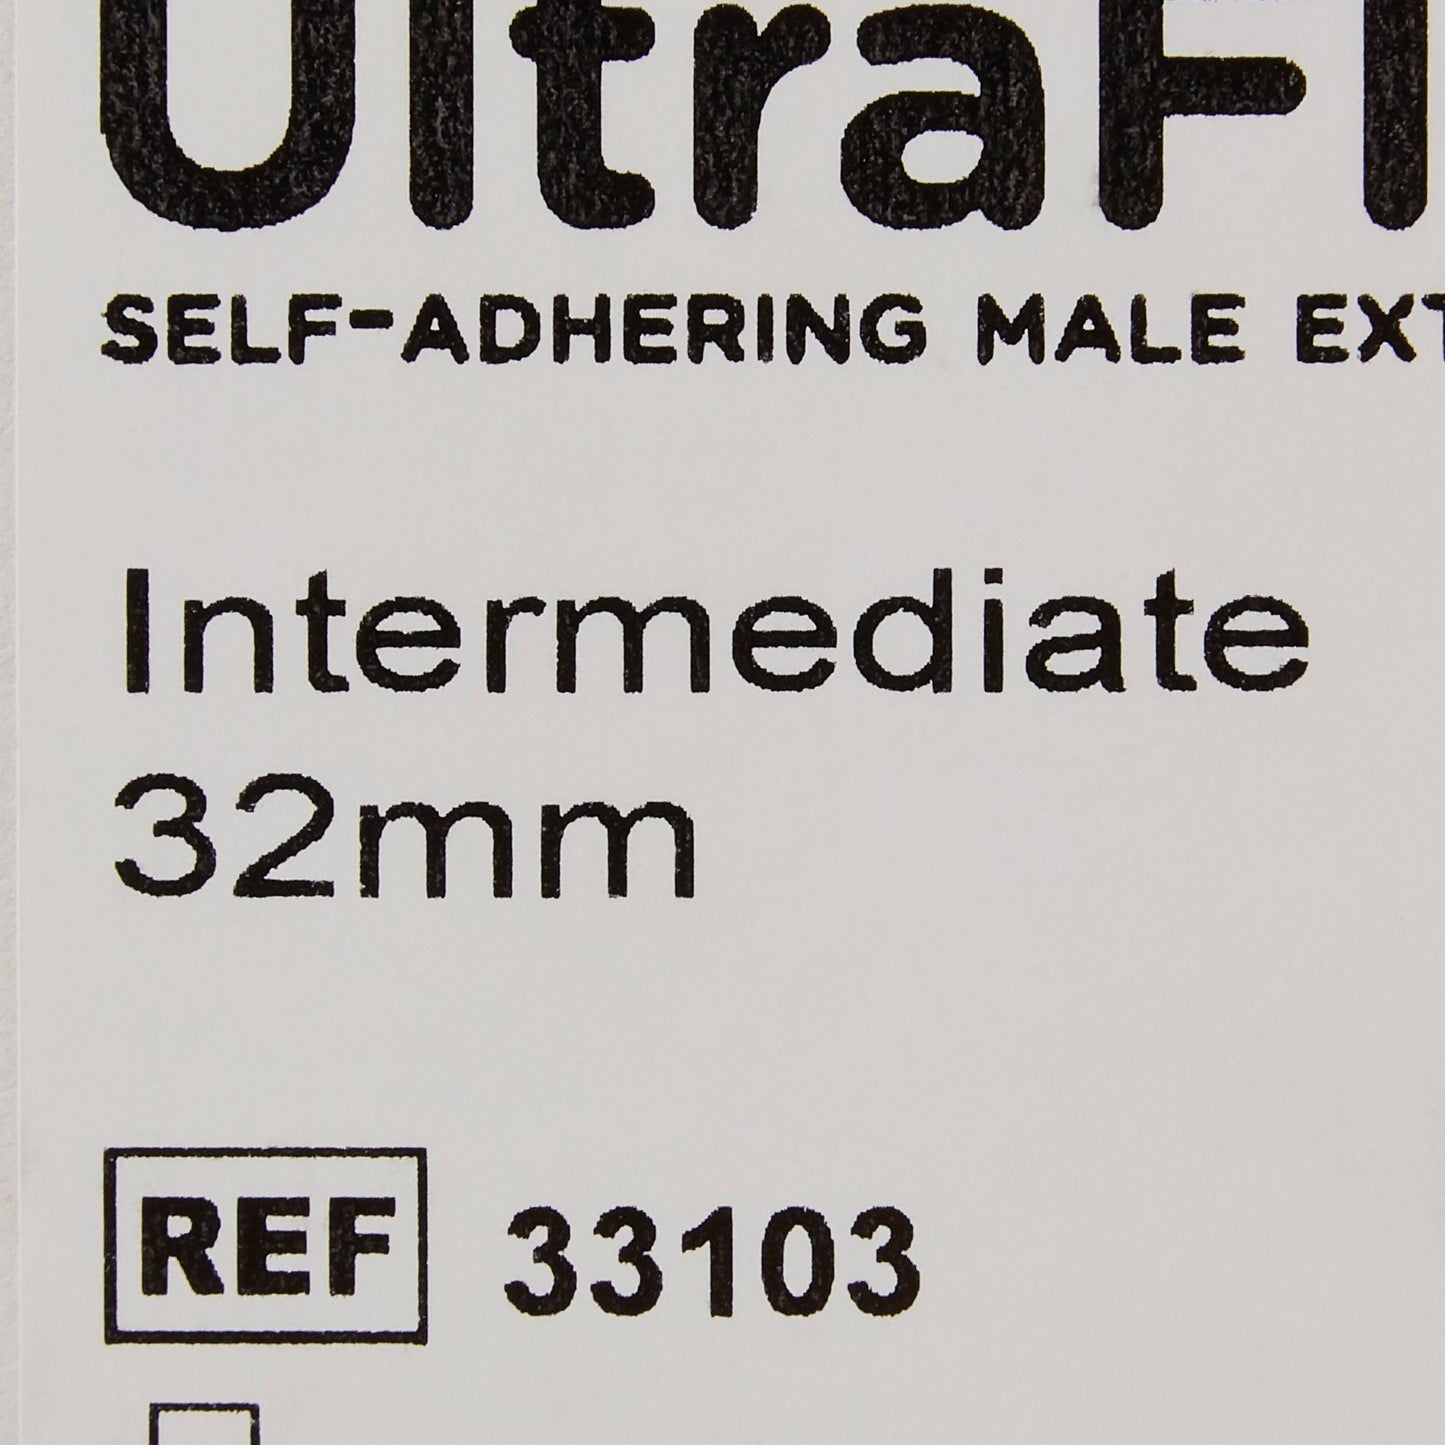 Bard UltraFlex® Male External Catheter, Intermediate, 100 ct